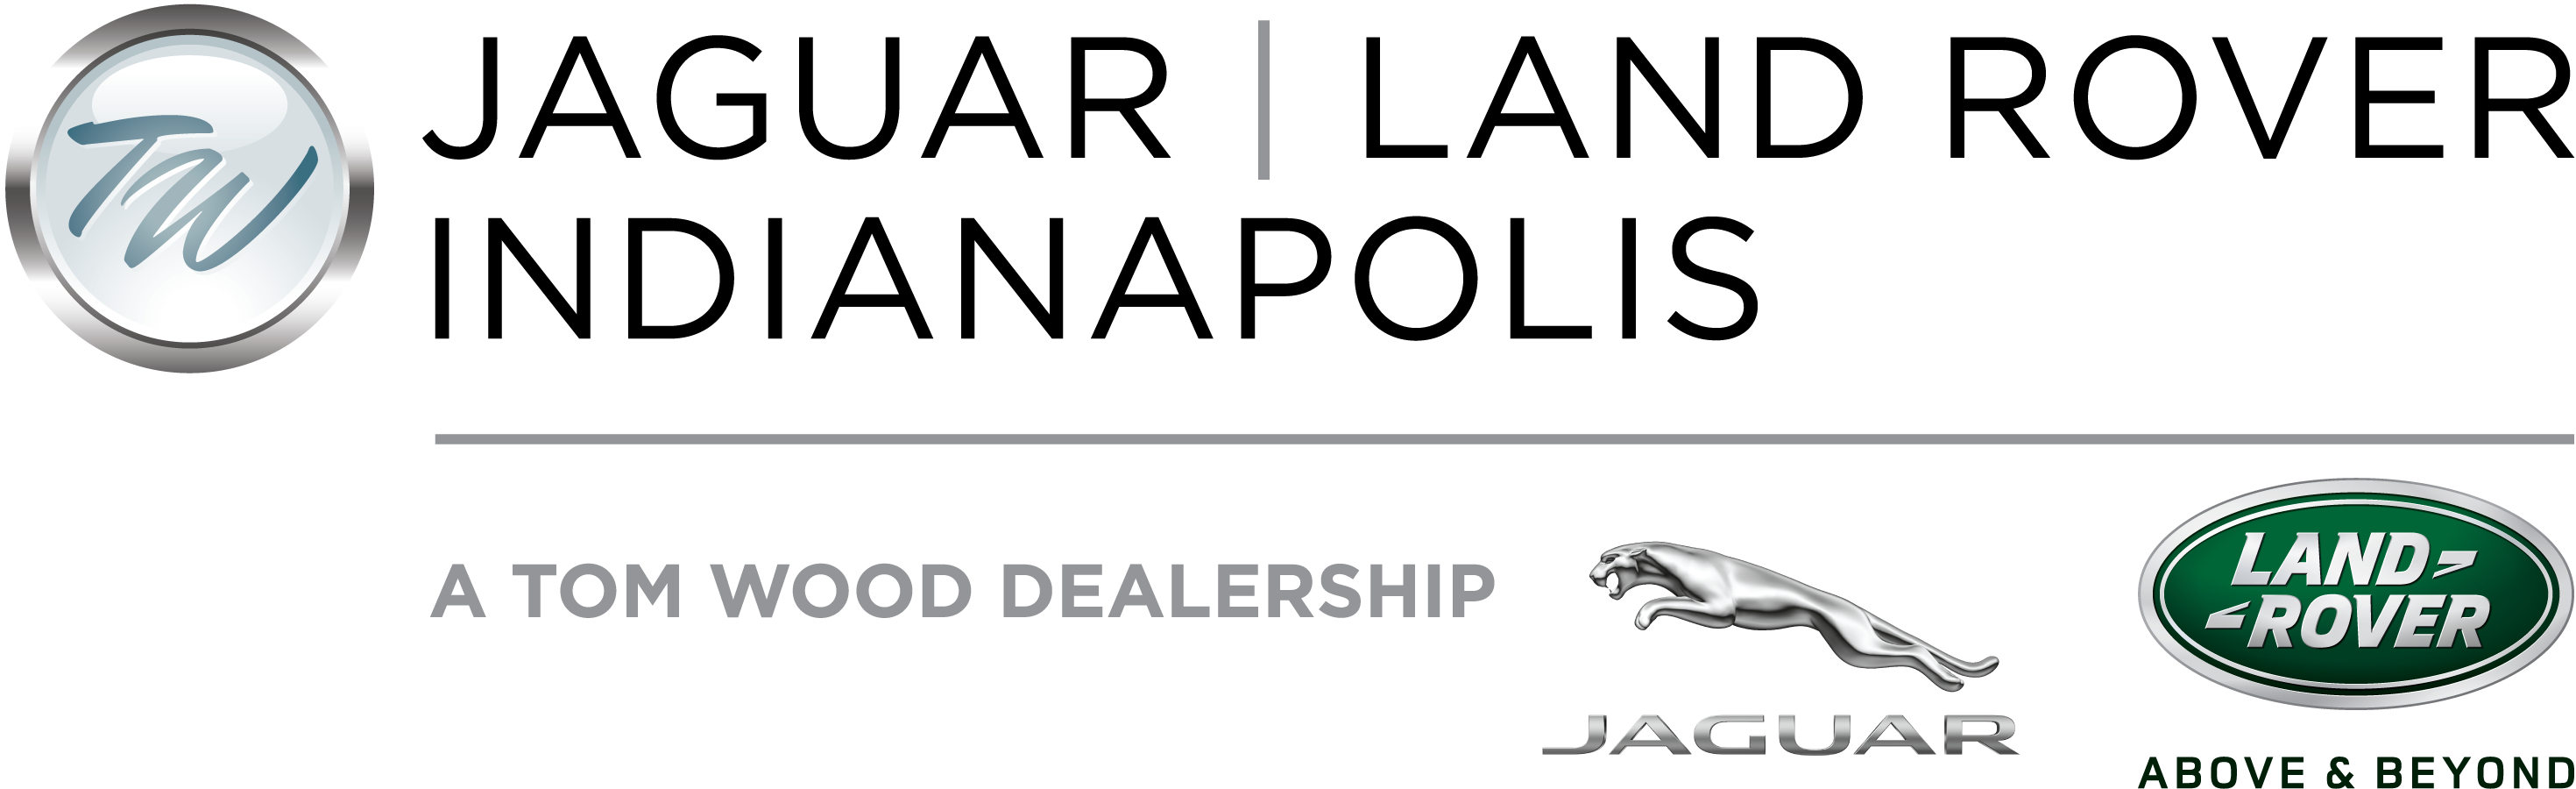 Jaguar, Land Rover of Indianapolis, a Tom Wood dealership